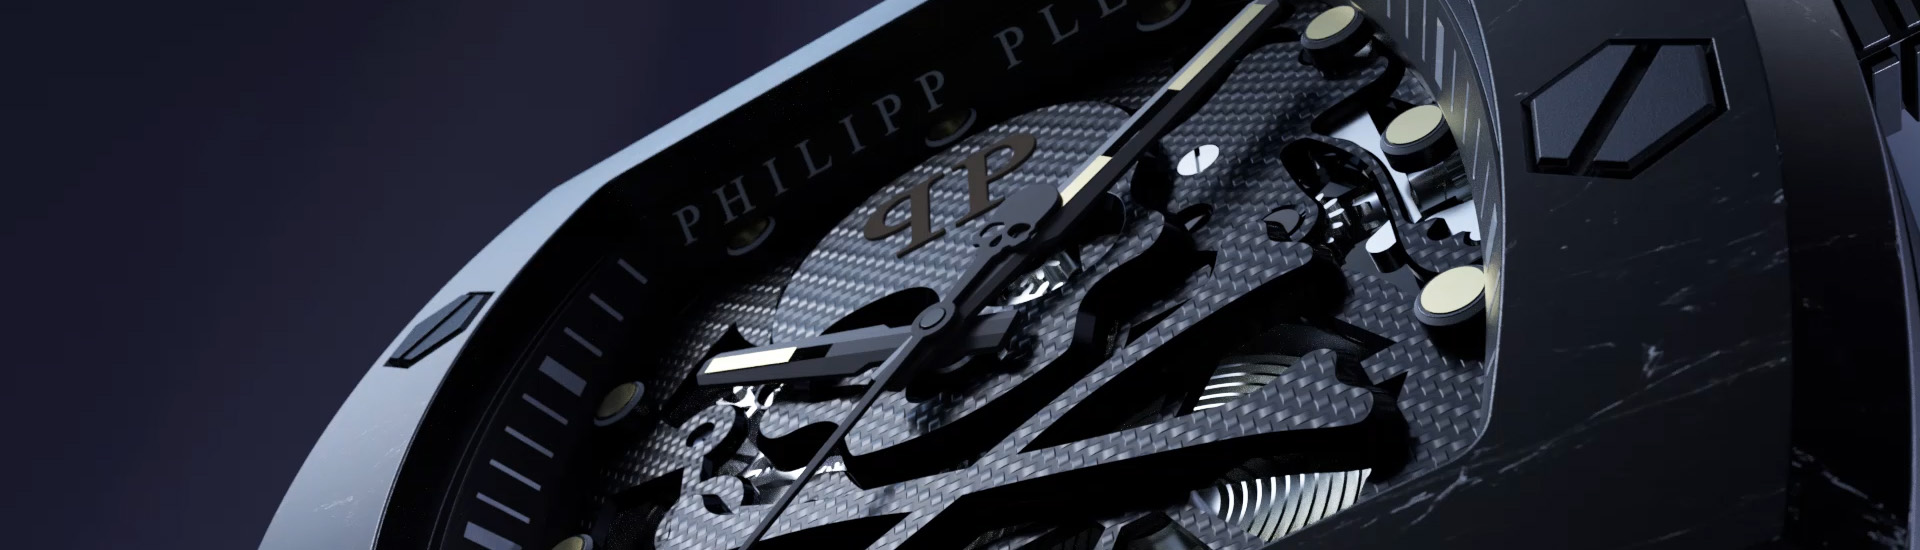 PHILIPP PLEIN: The Ultimate Fashion Luxury E-Shop - Official